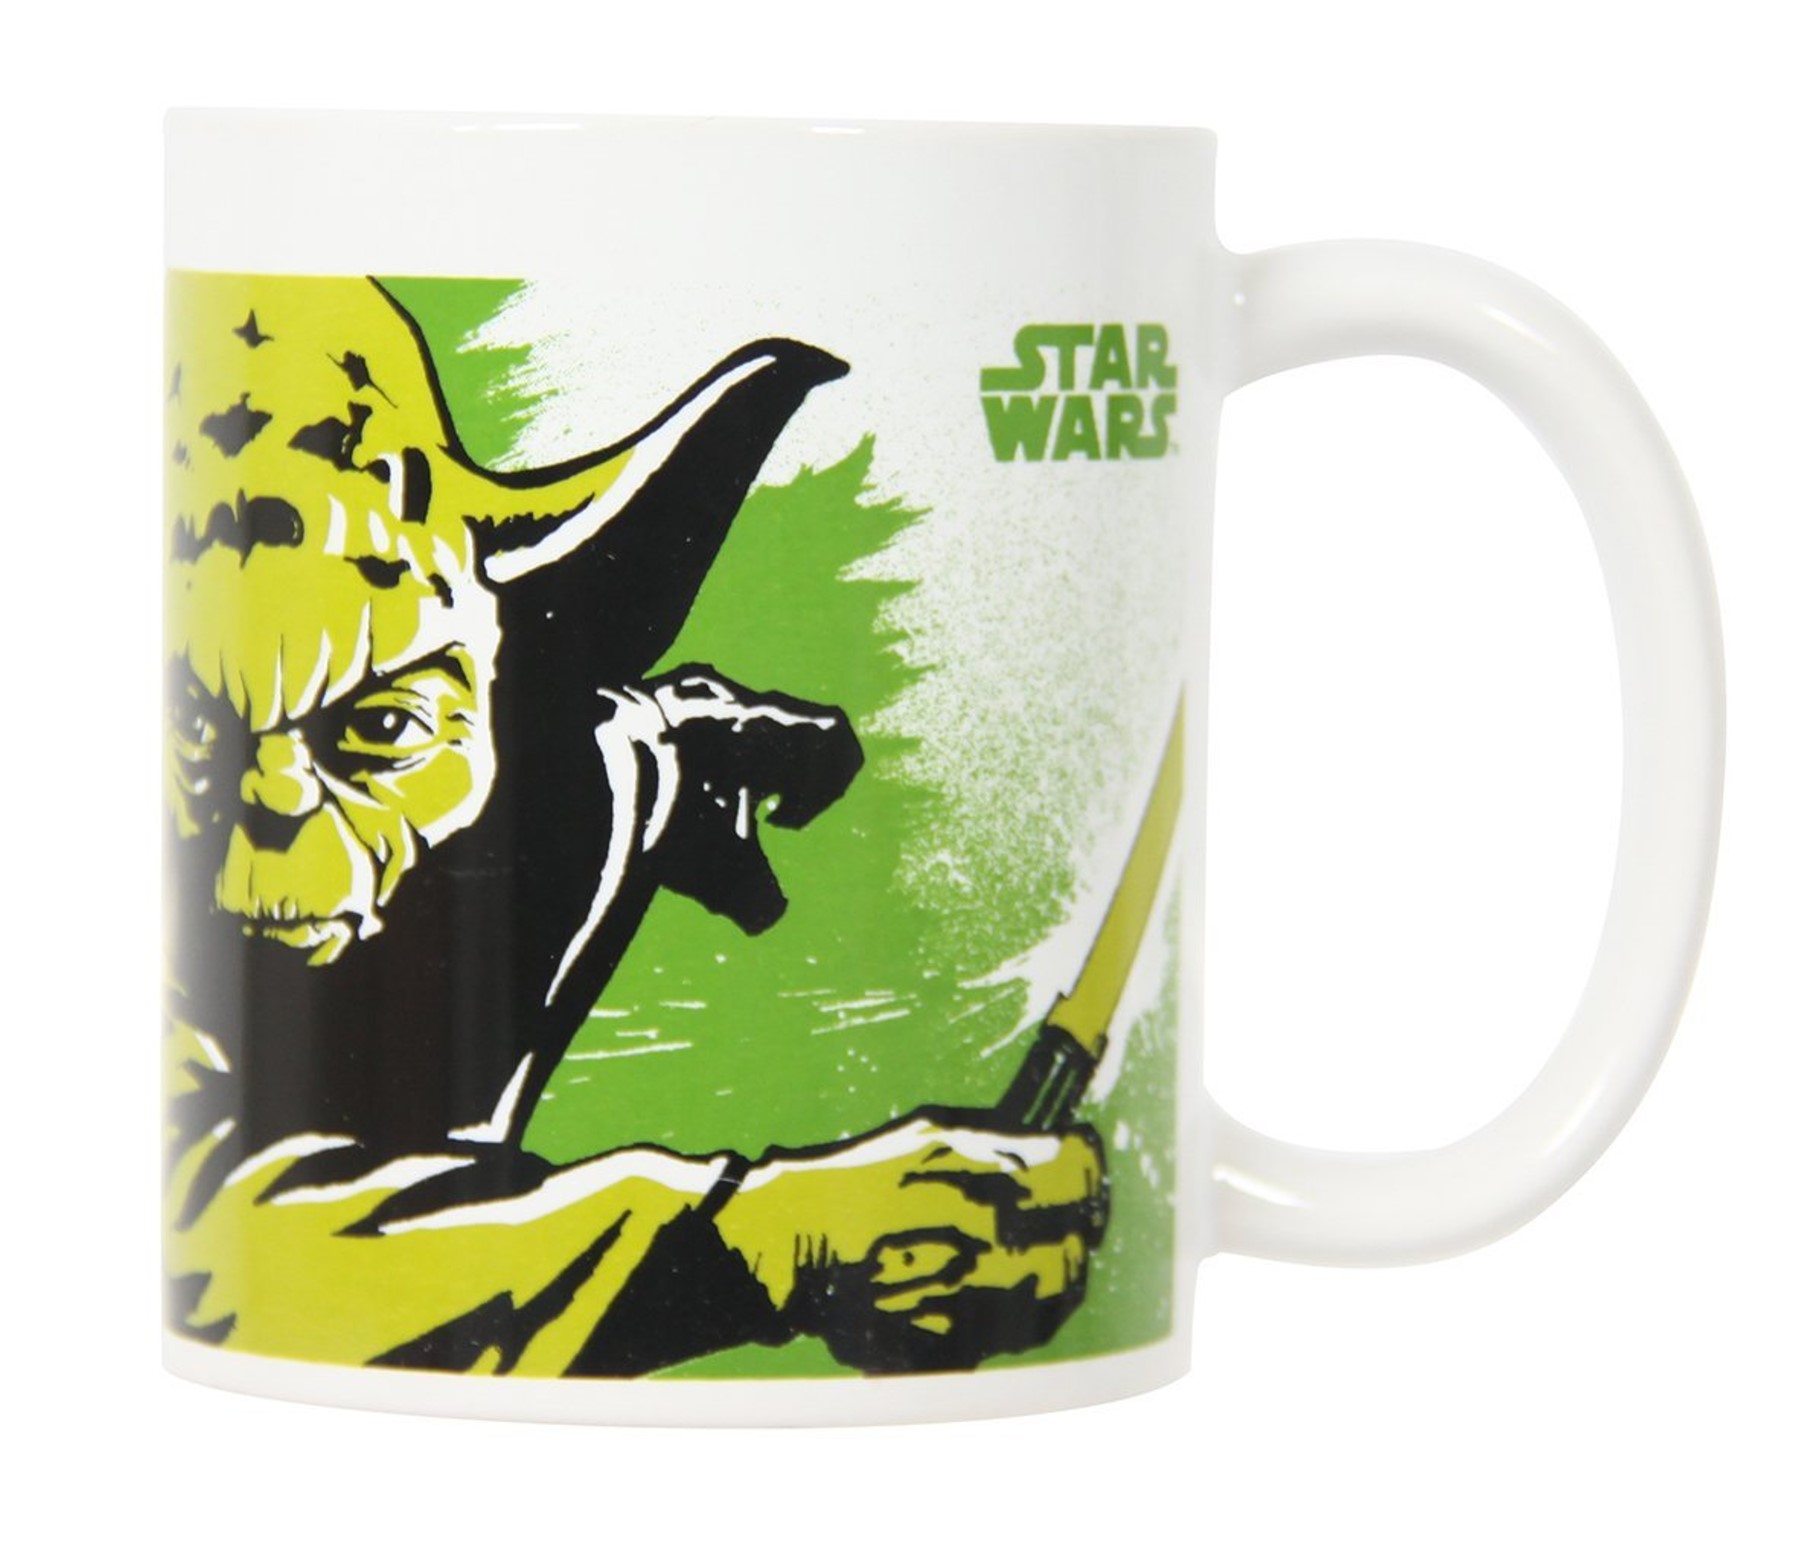 Star Wars Yoda Mug 72805.jpg  by Thingimijigs